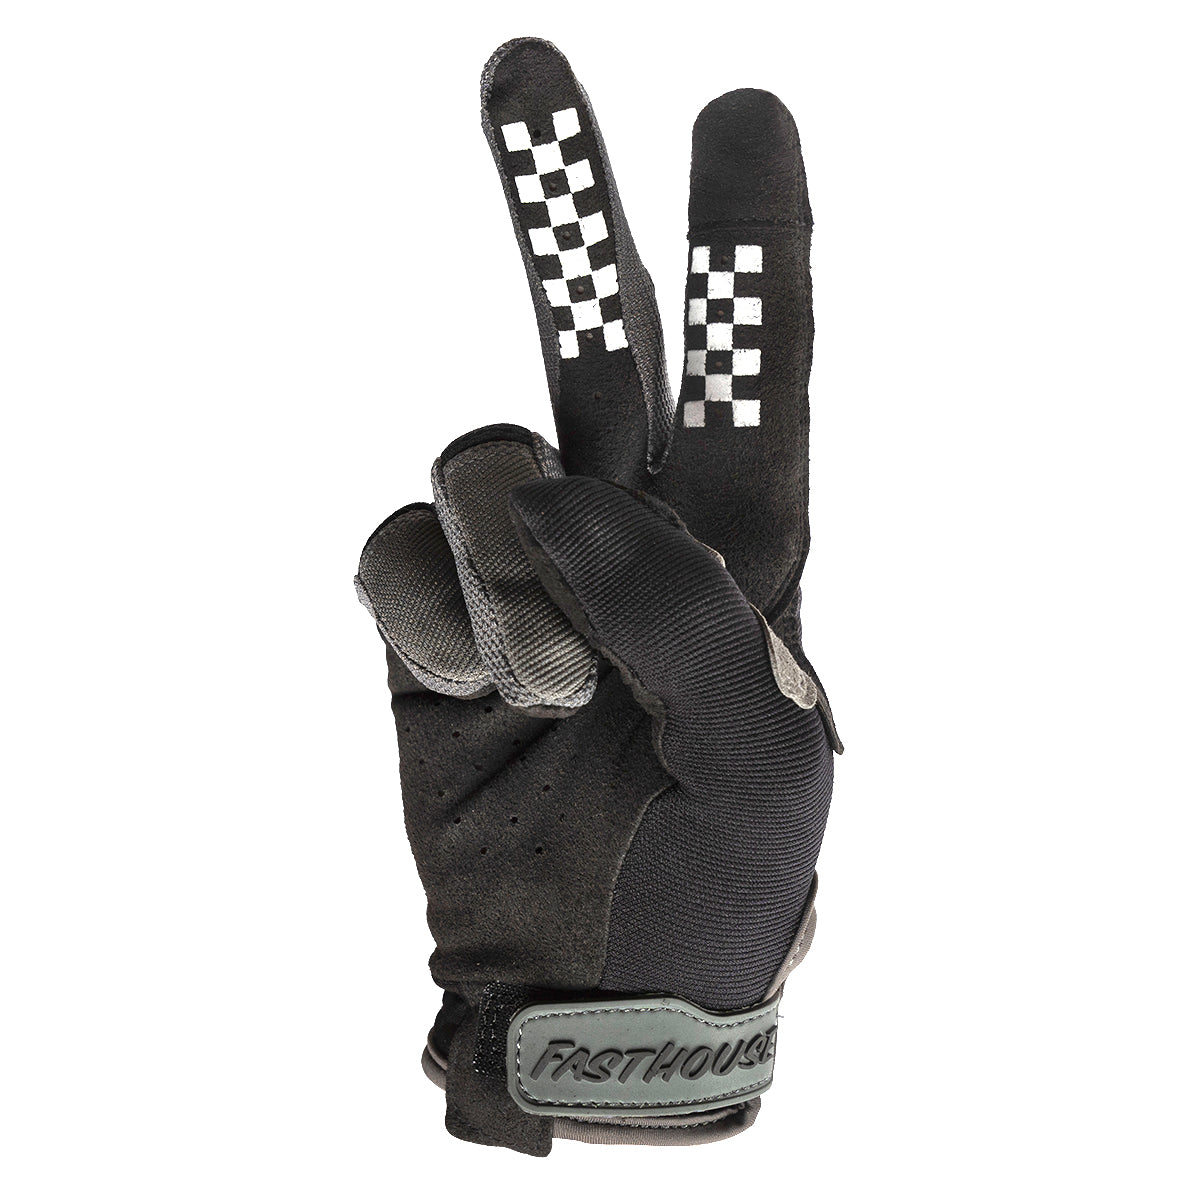 Speed Style Glove - Black/Gray